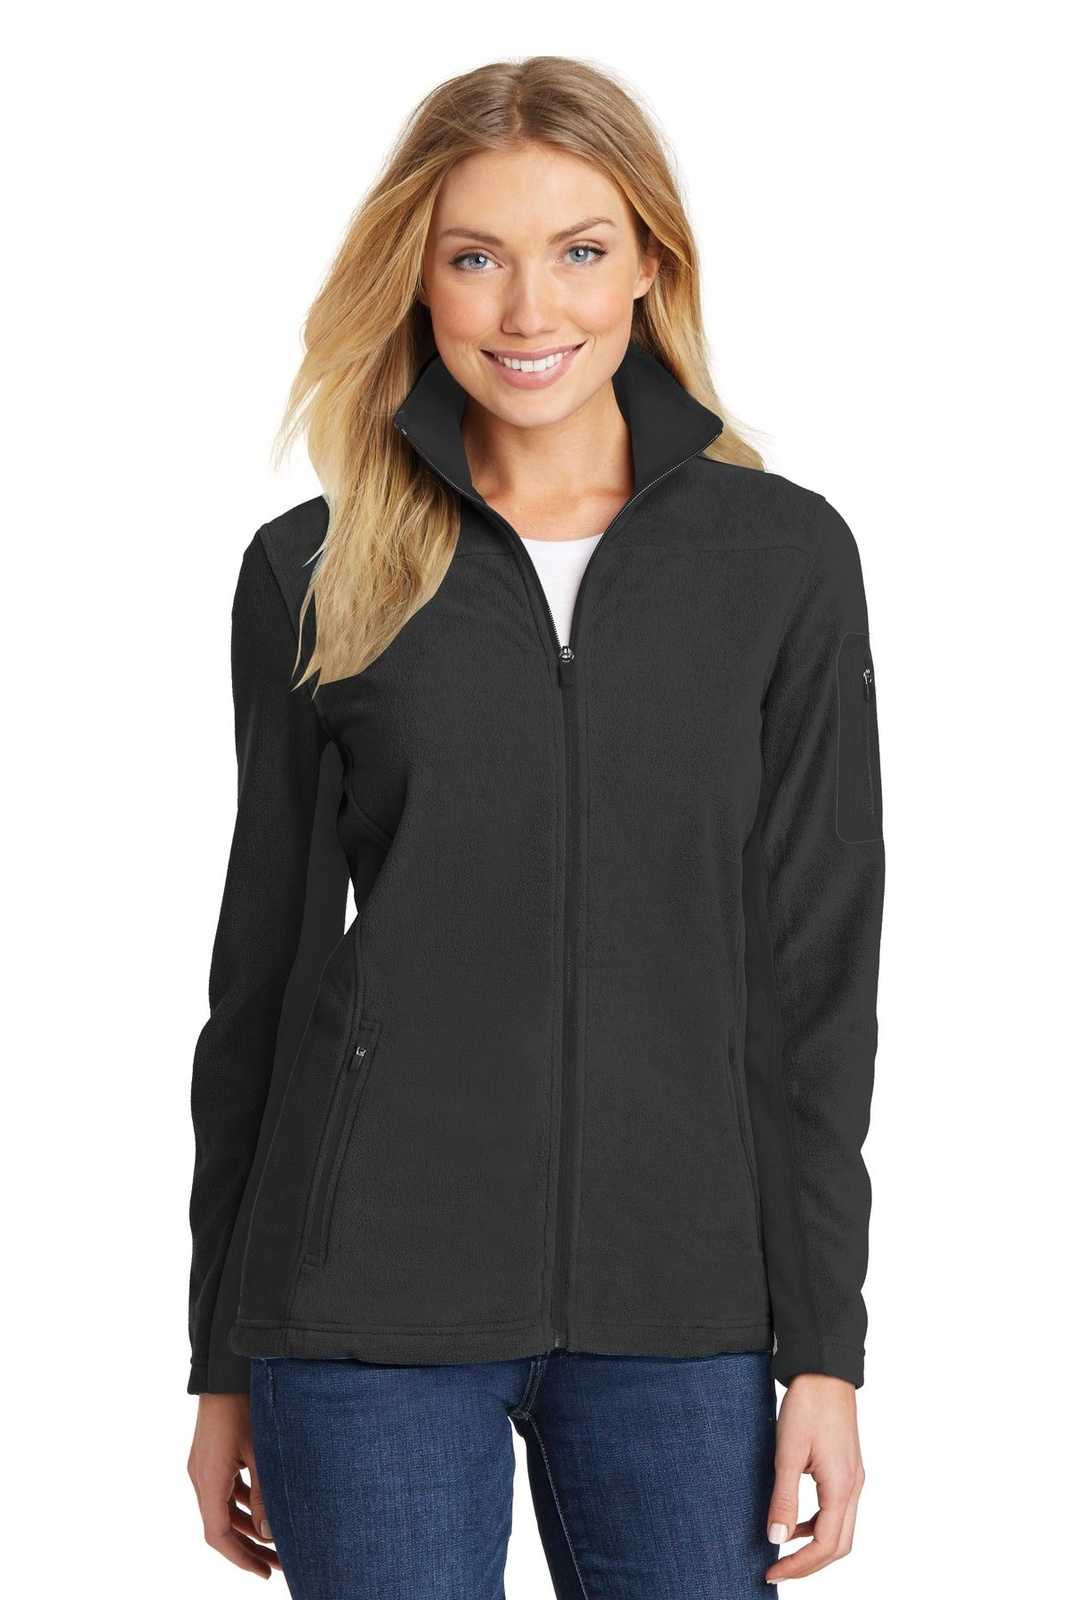 Port Authority L233 Ladies Summit Fleece Full-Zip Jacket - Black Black - HIT a Double - 1